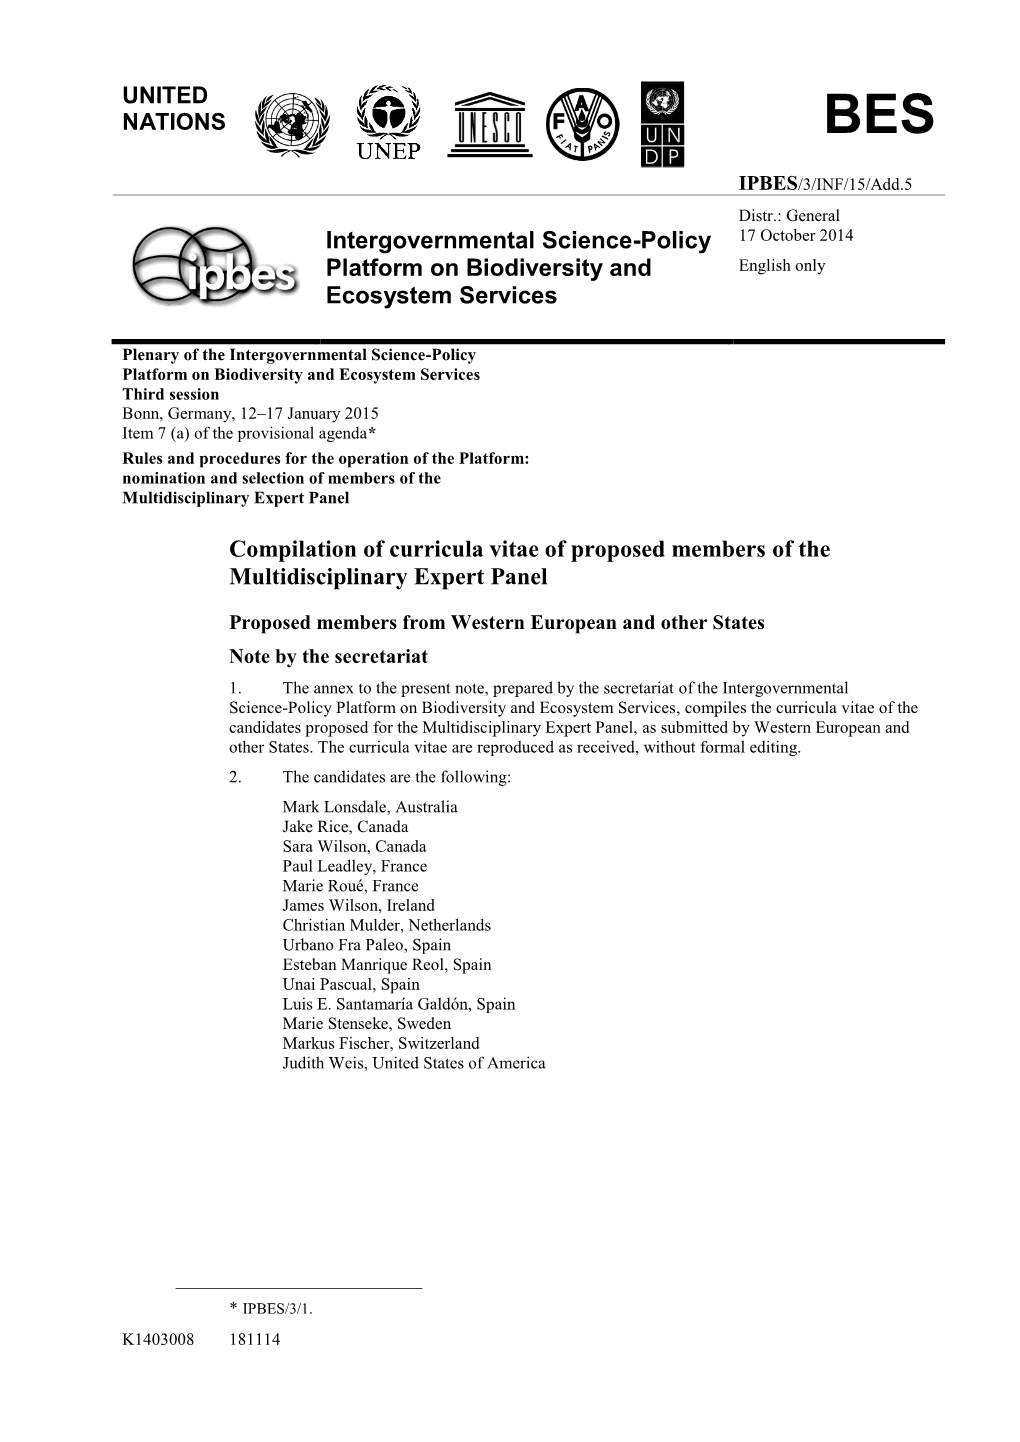 Intergovernmental Science-Policy Platform on Biodiversity And